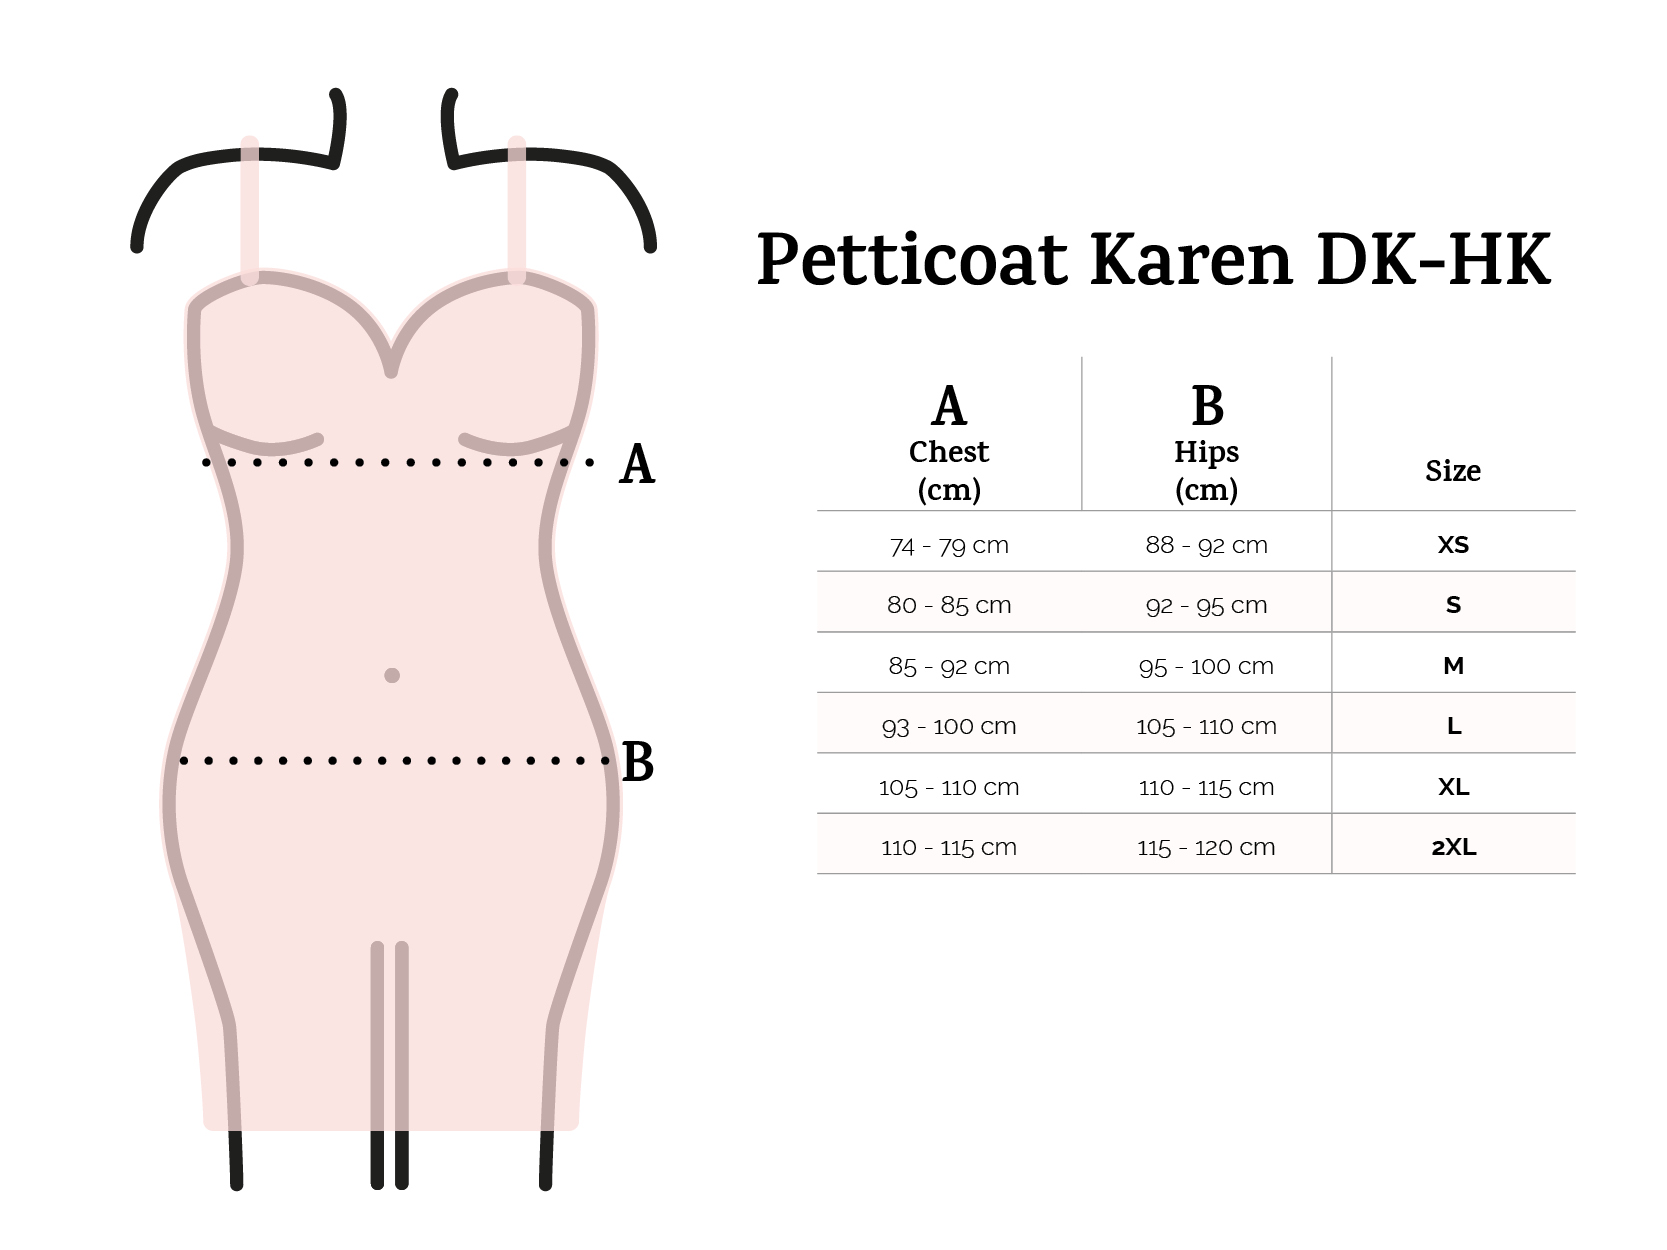 Petticoat Karen DK-HK